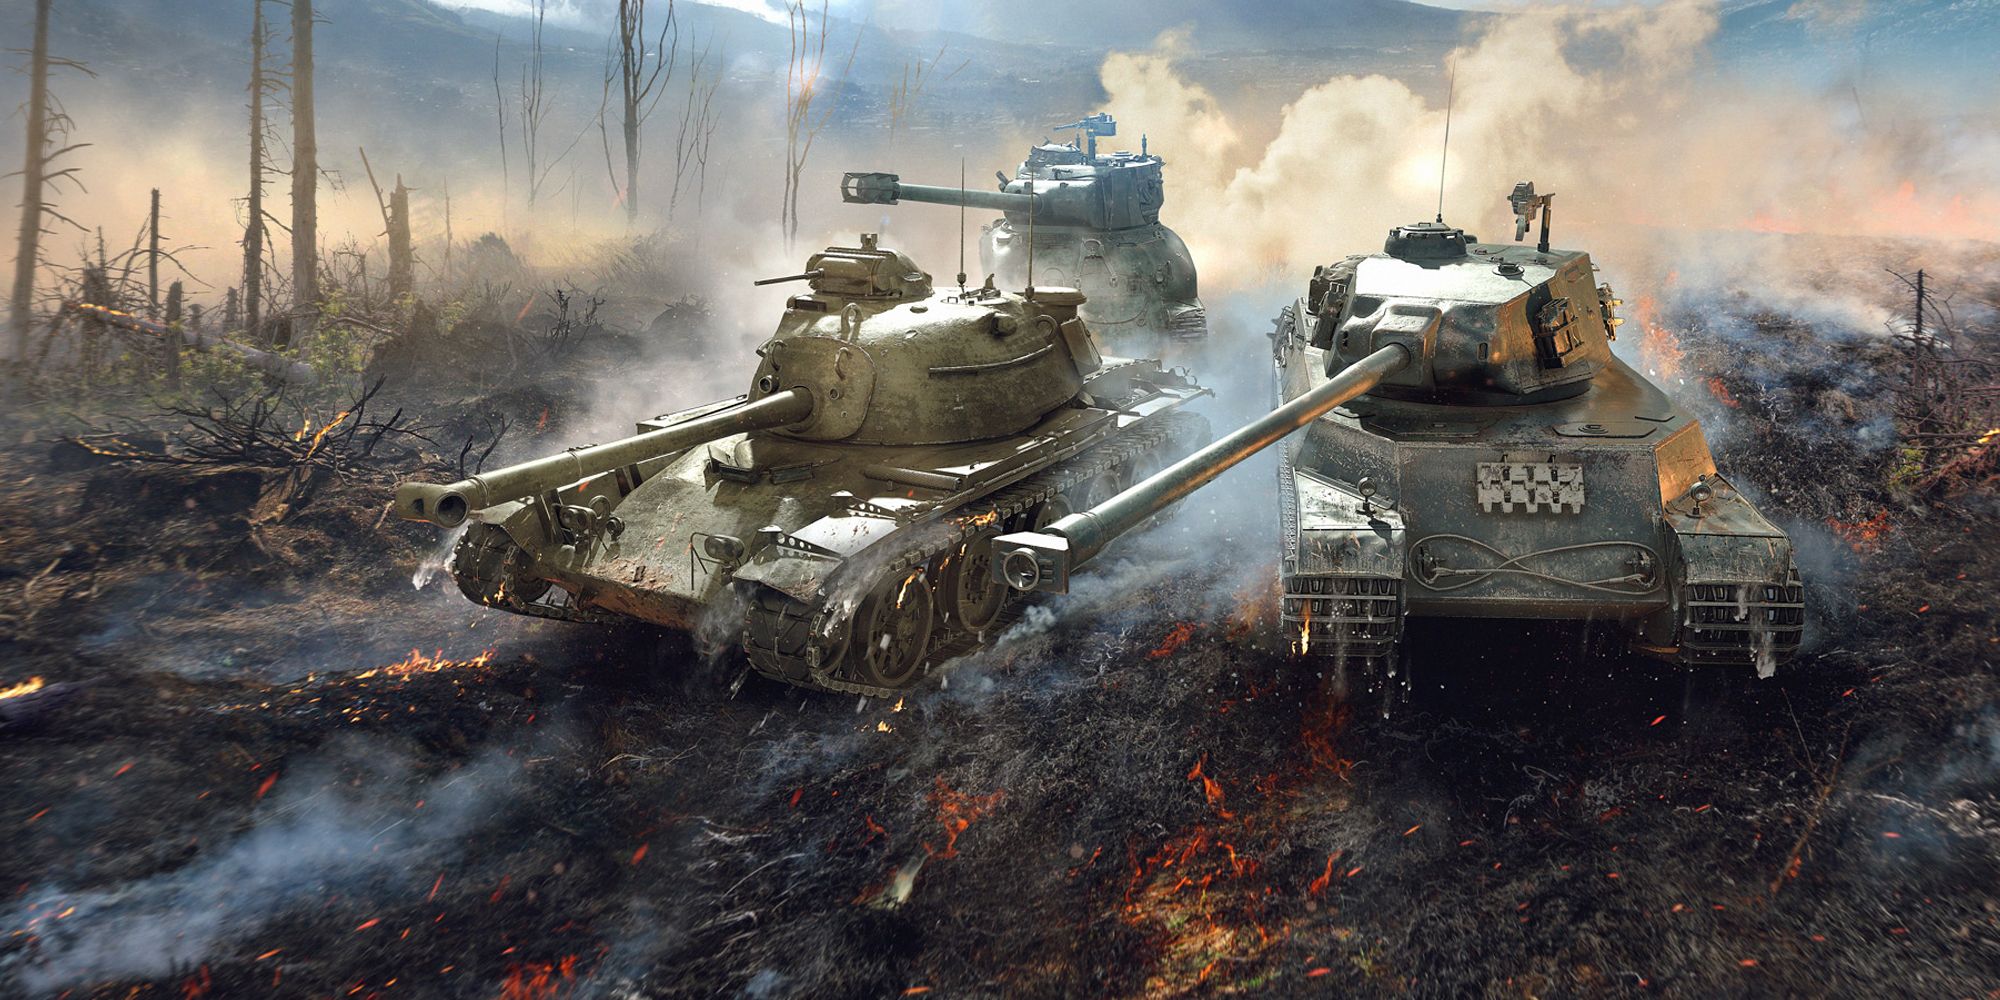 World Of Tanks. Three tanks in the photo. Burning smolders of ash across the floor.